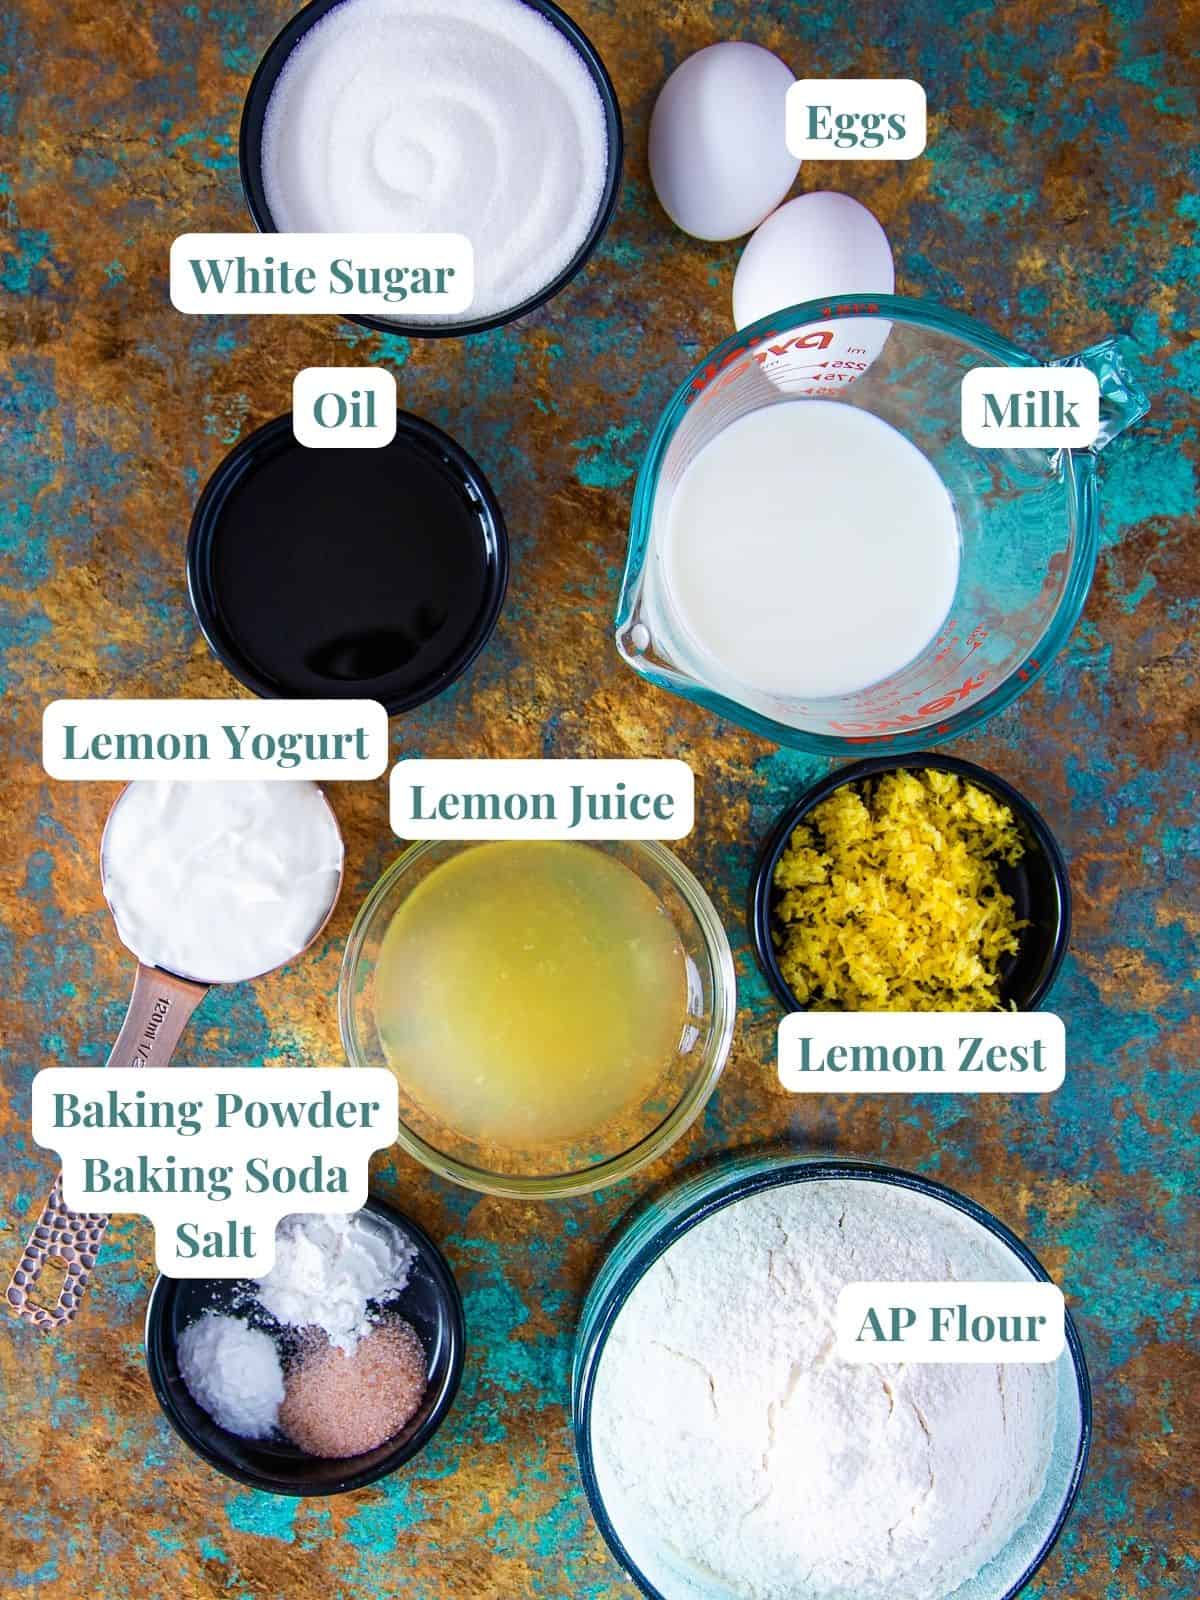 Ingredients for a baked lemon donuts with lemon glaze.